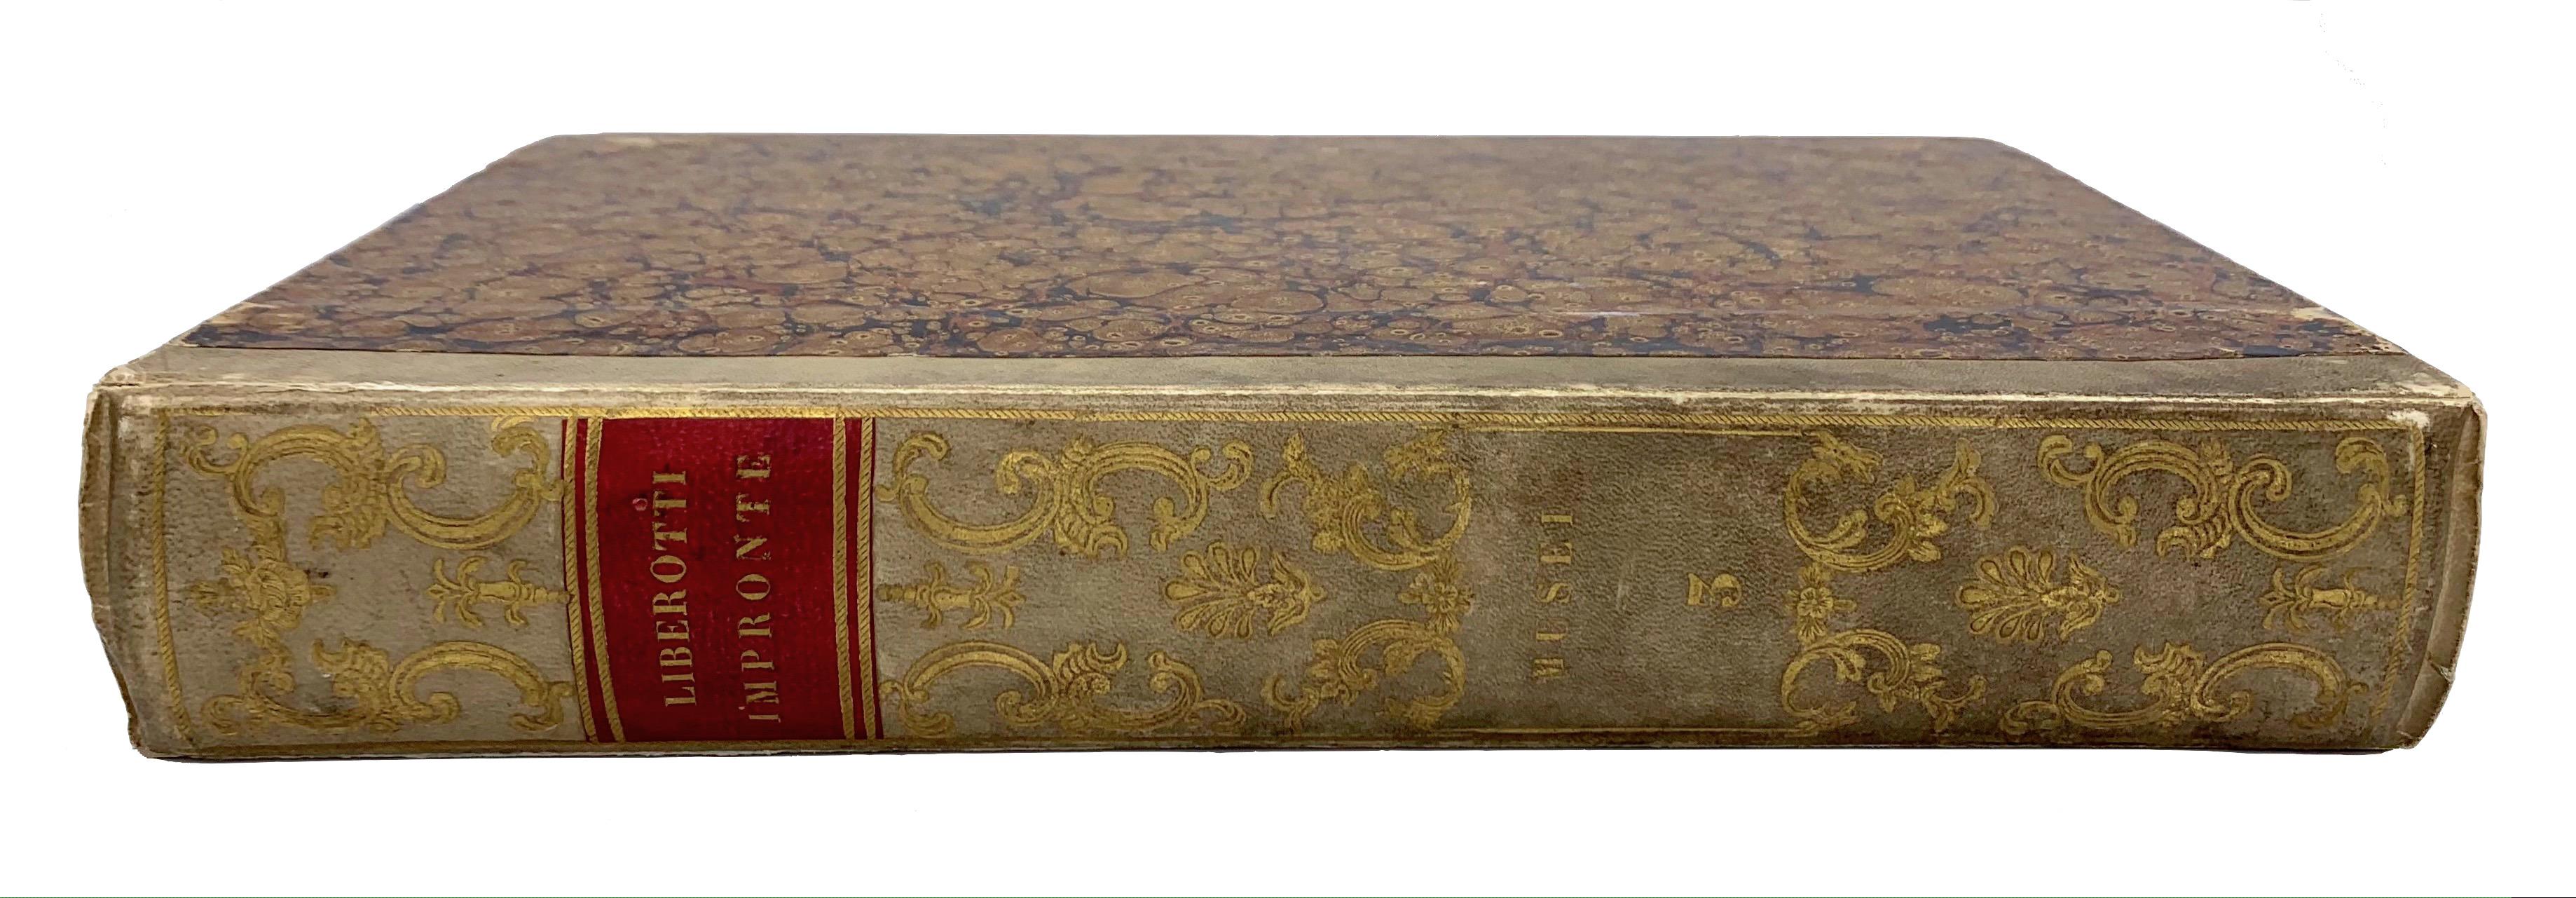 Antique Grand Tour Souvenir Dactyl Library Book 36 Plaster Casts Rom 1840-50 For Sale 7